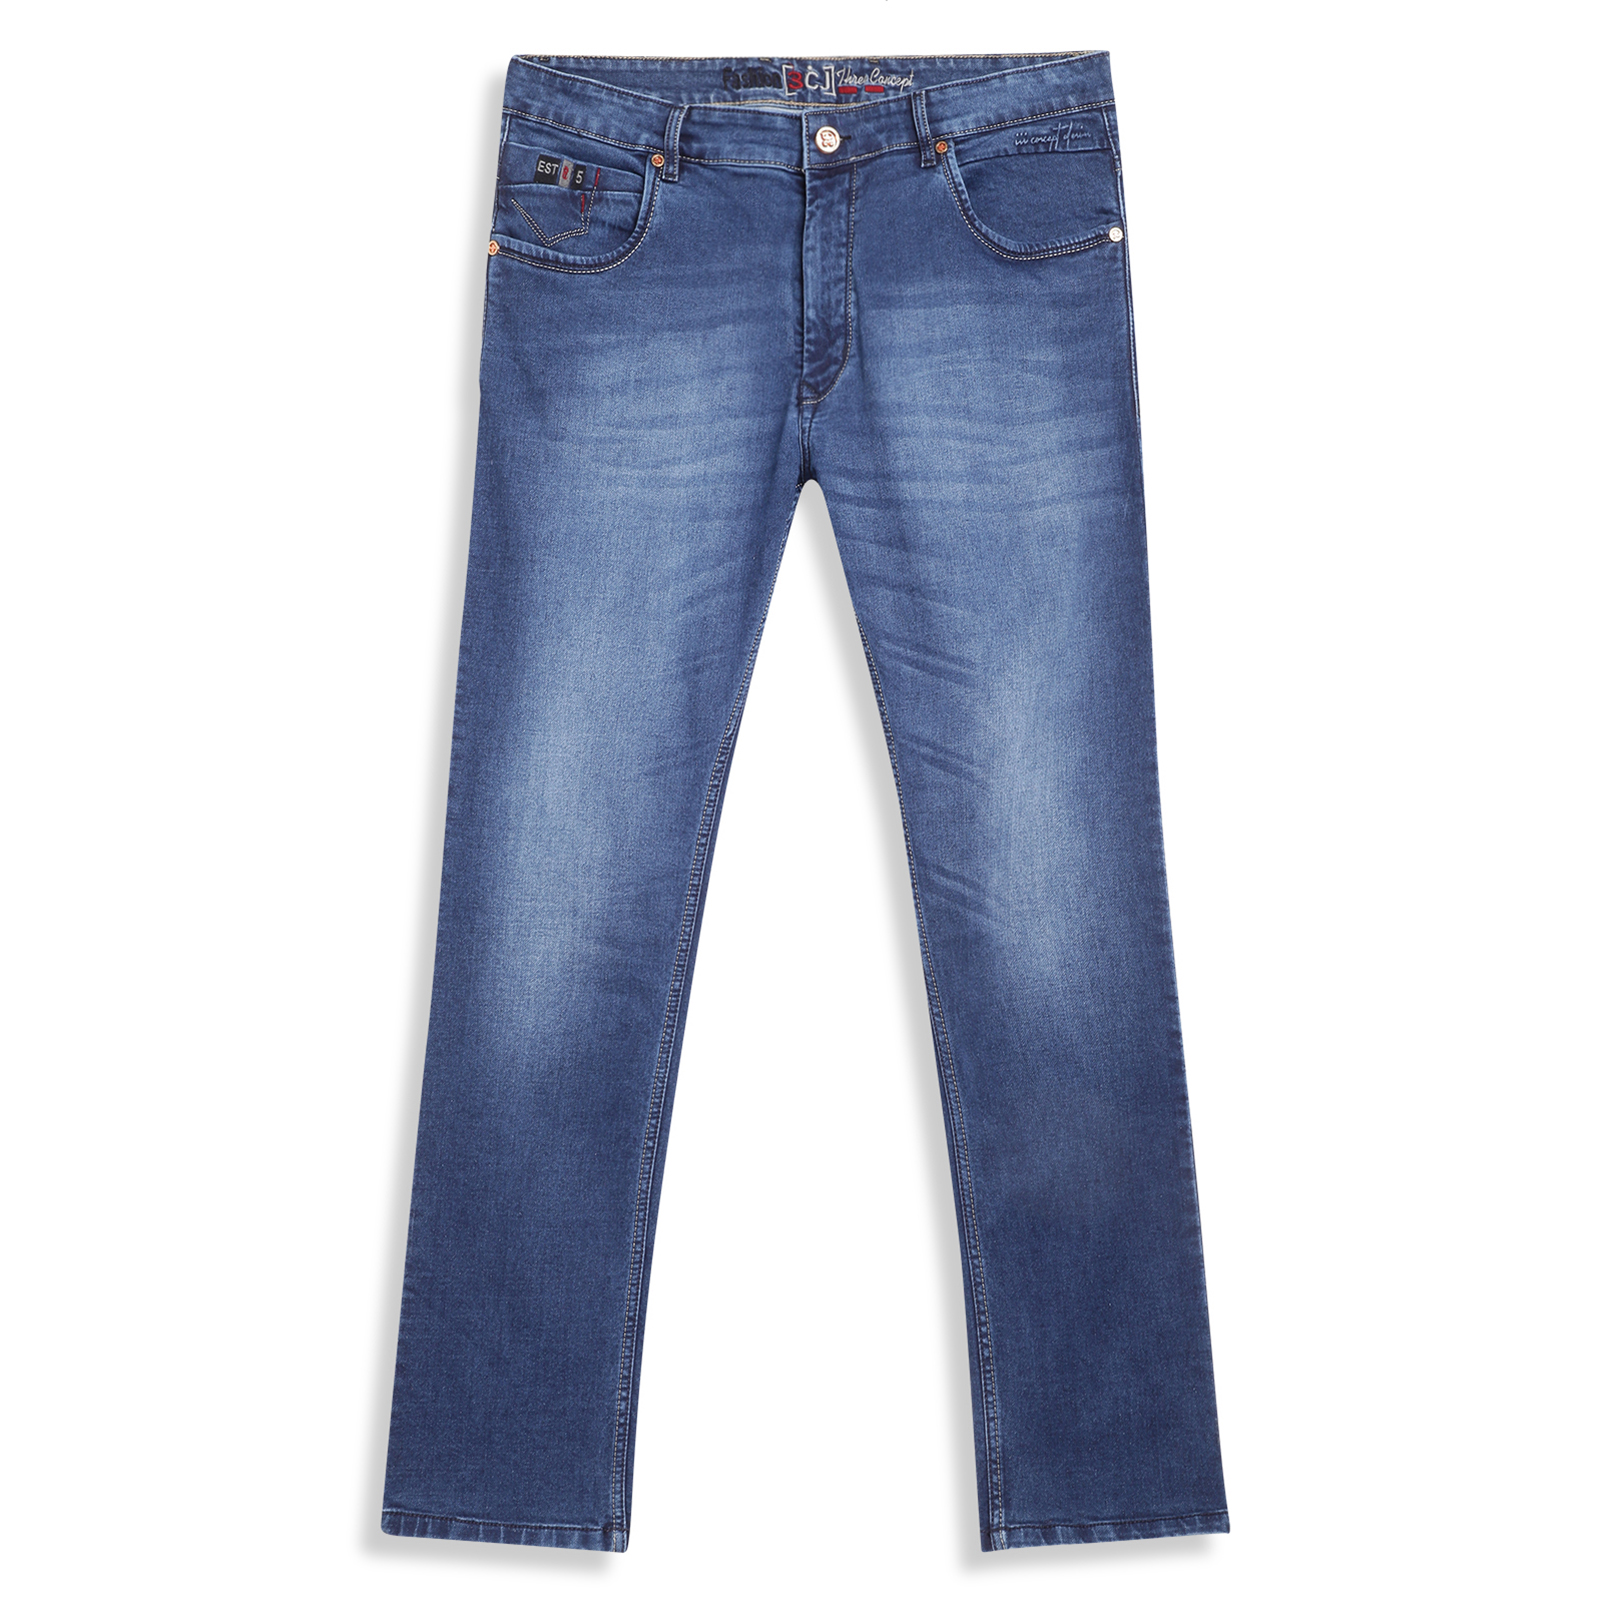 Instafab Men Plus Size Stylish Side Striped Denim JeansSS20JNS2LMPLNBU38  Blue  Amazonin Clothing  Accessories